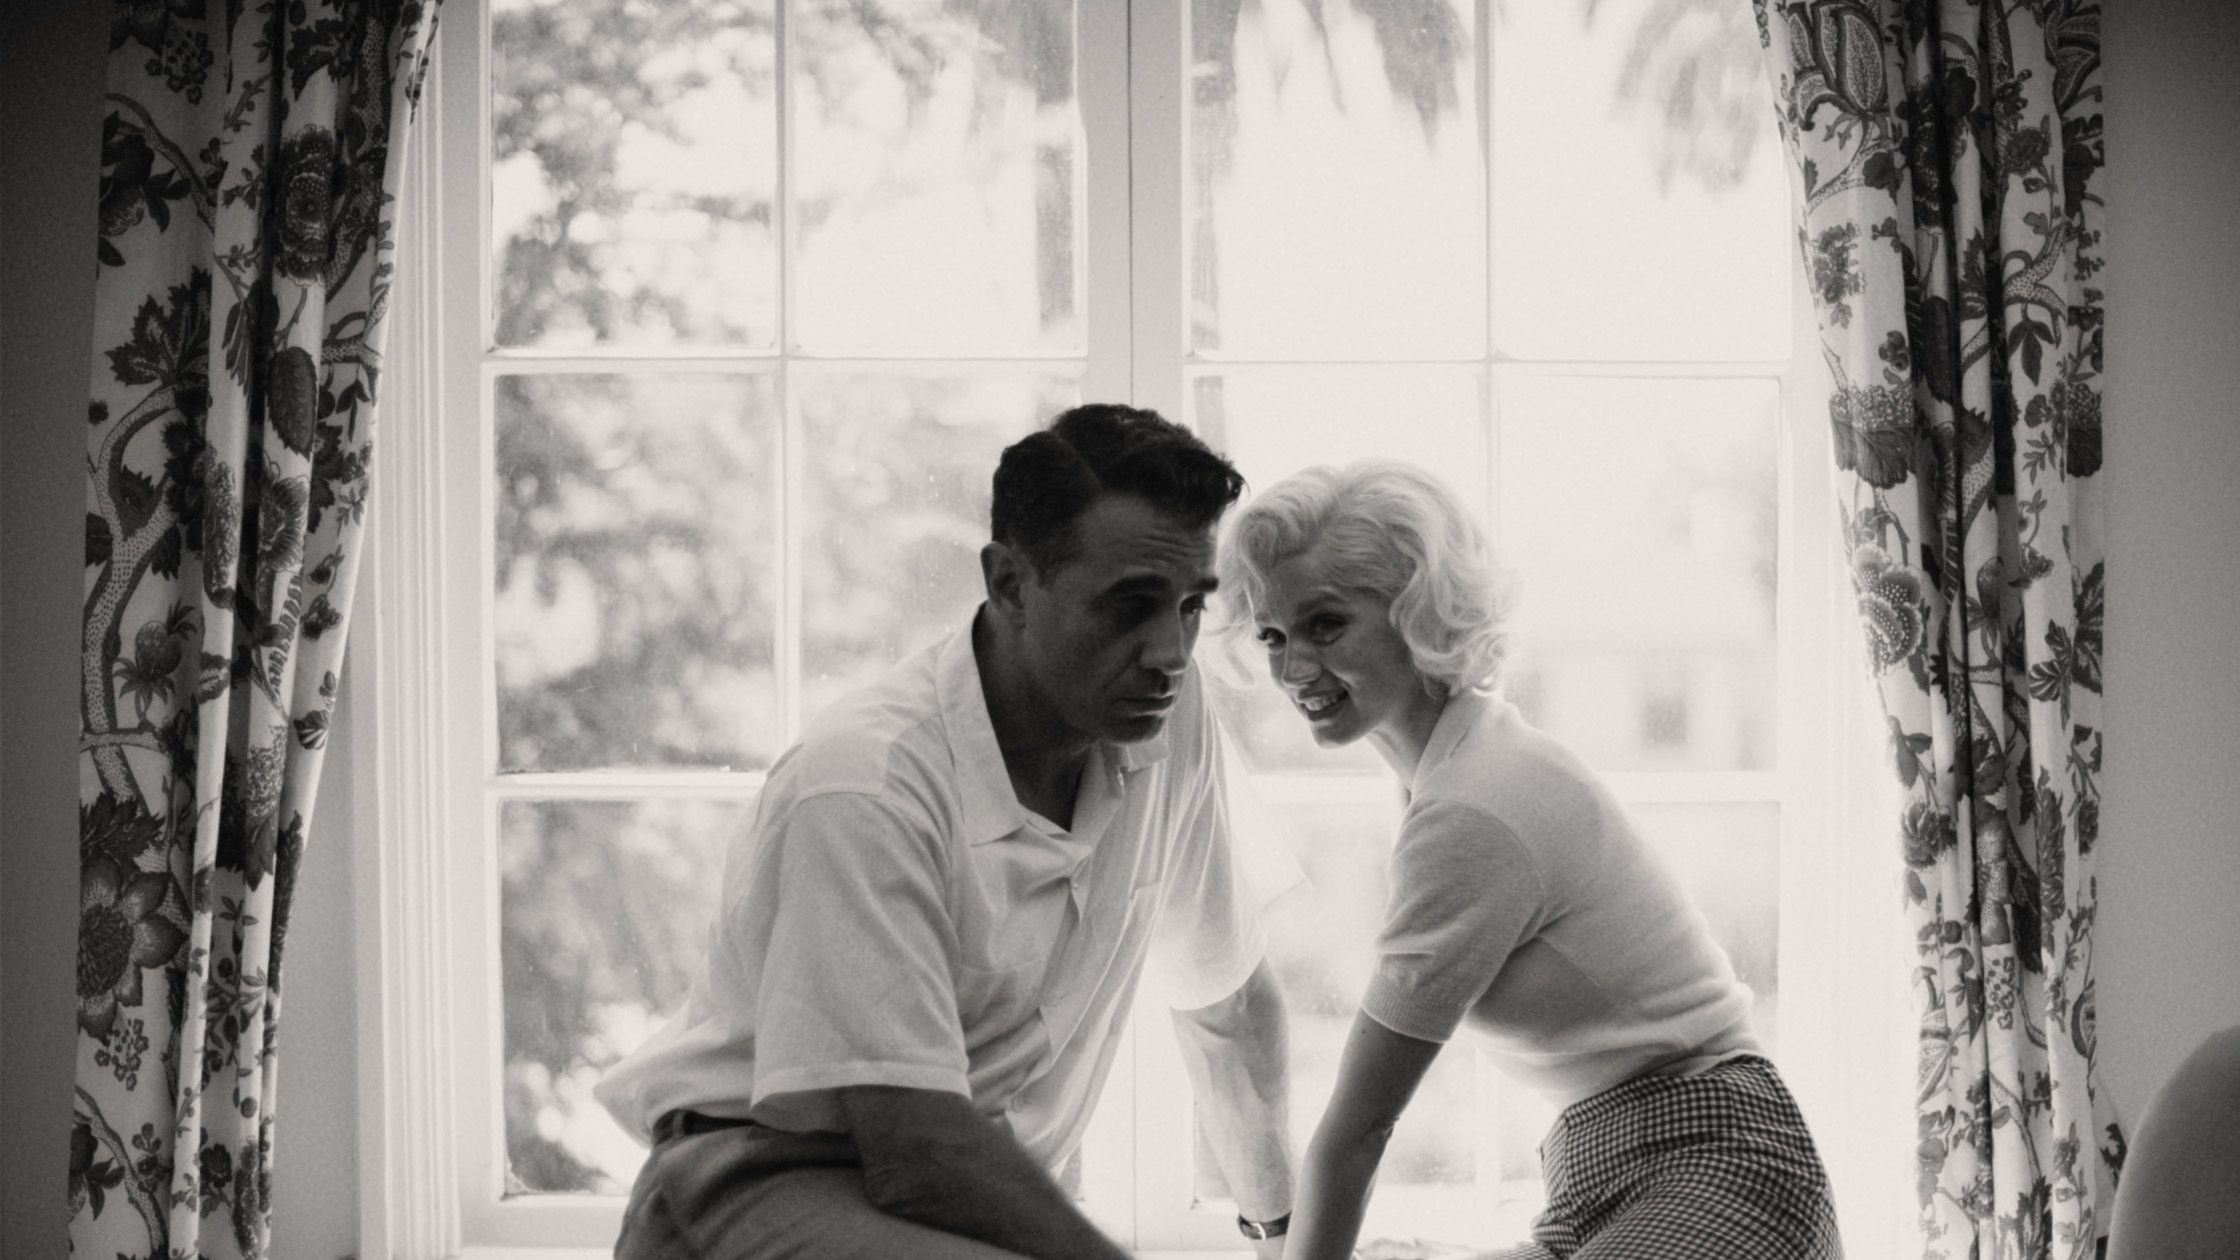 True Story of Marilyn Monroe and Joe DiMaggio's Relationship in Blonde